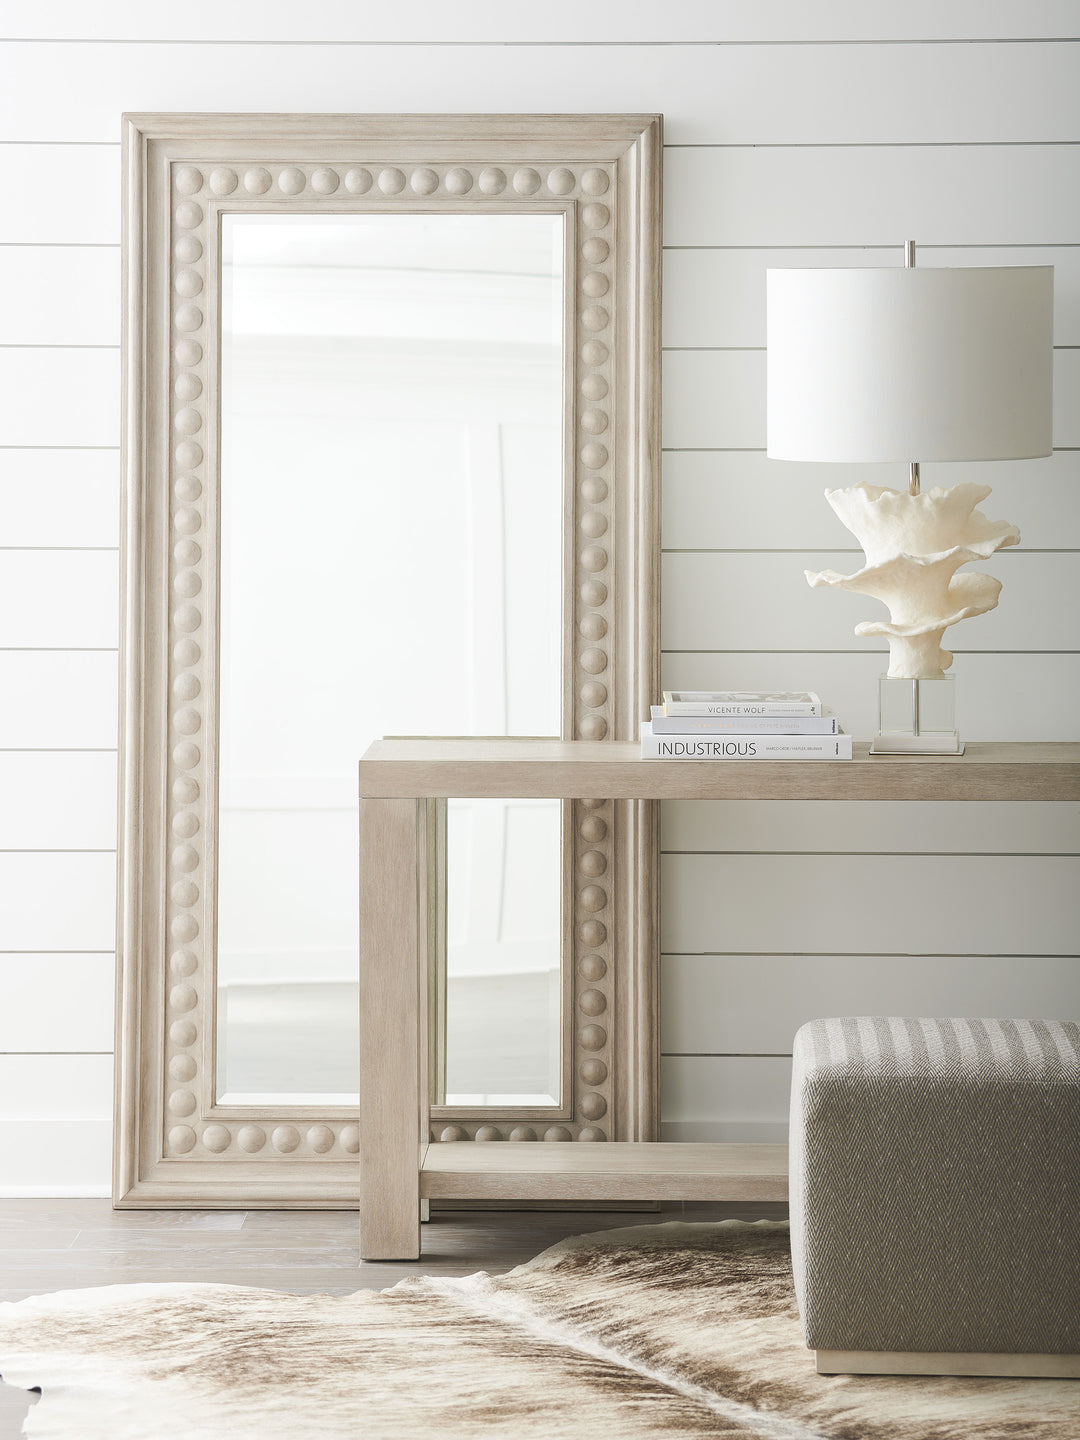 American Home Furniture | Barclay Butera  - Malibu Carbon Floor Mirror